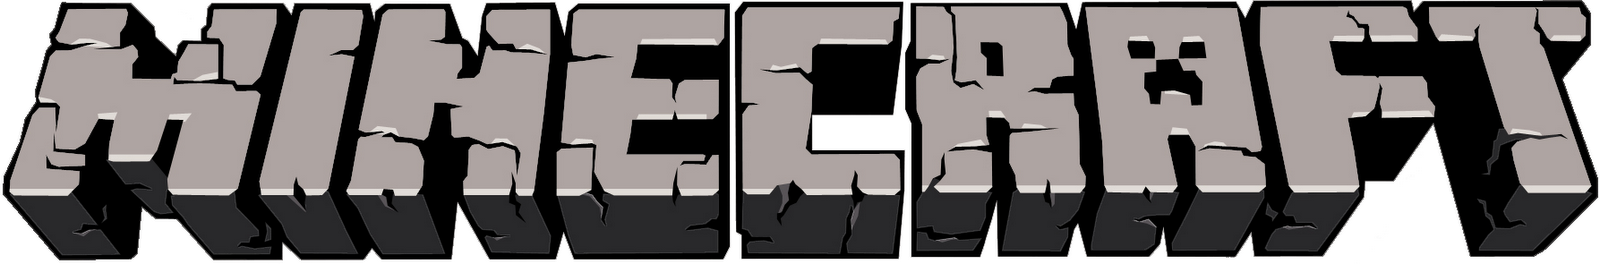 Minecraft Logo - Free Transparent PNG Logos